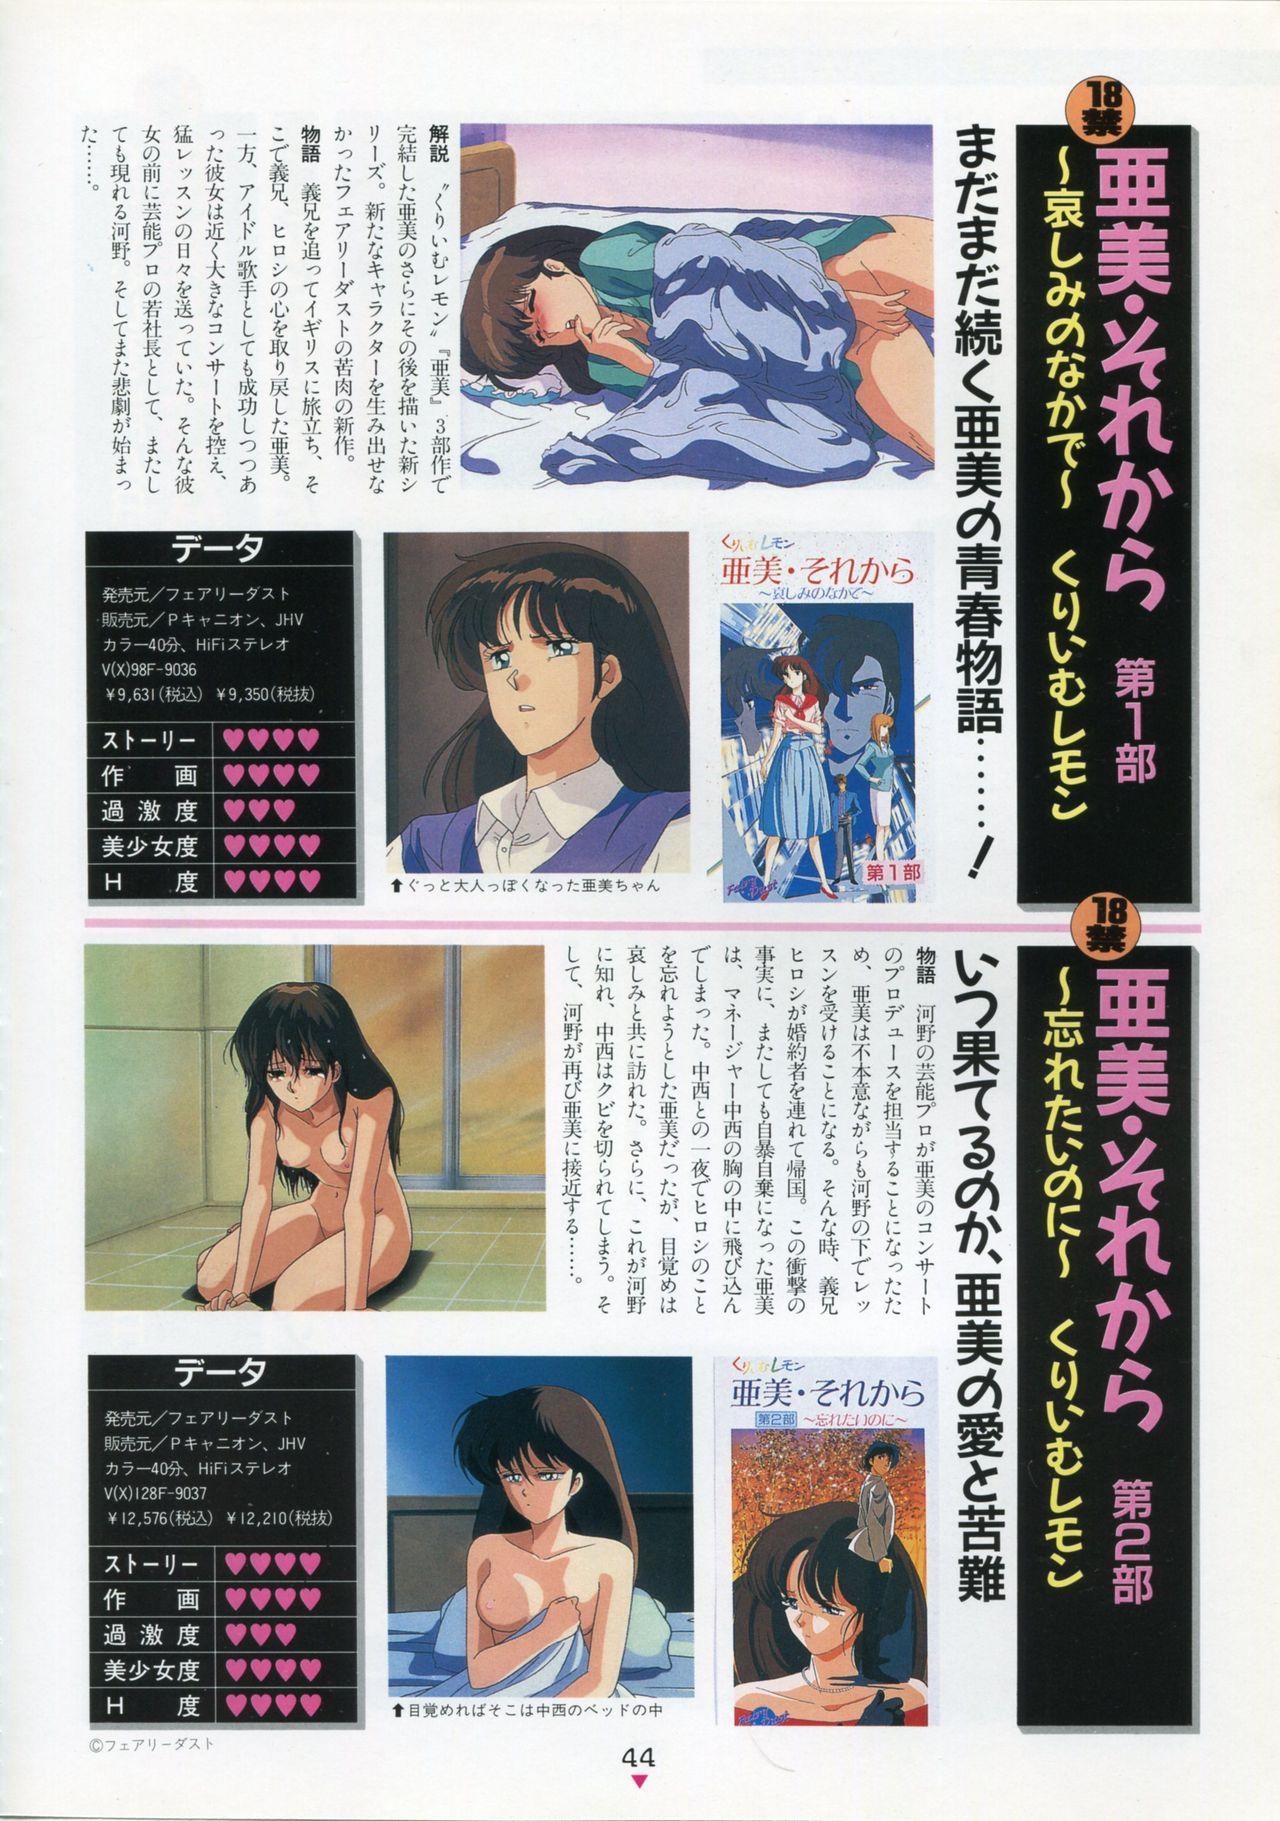 Bishoujo Anime Daizenshuu - Adult Animation Video Catalog 1991 39